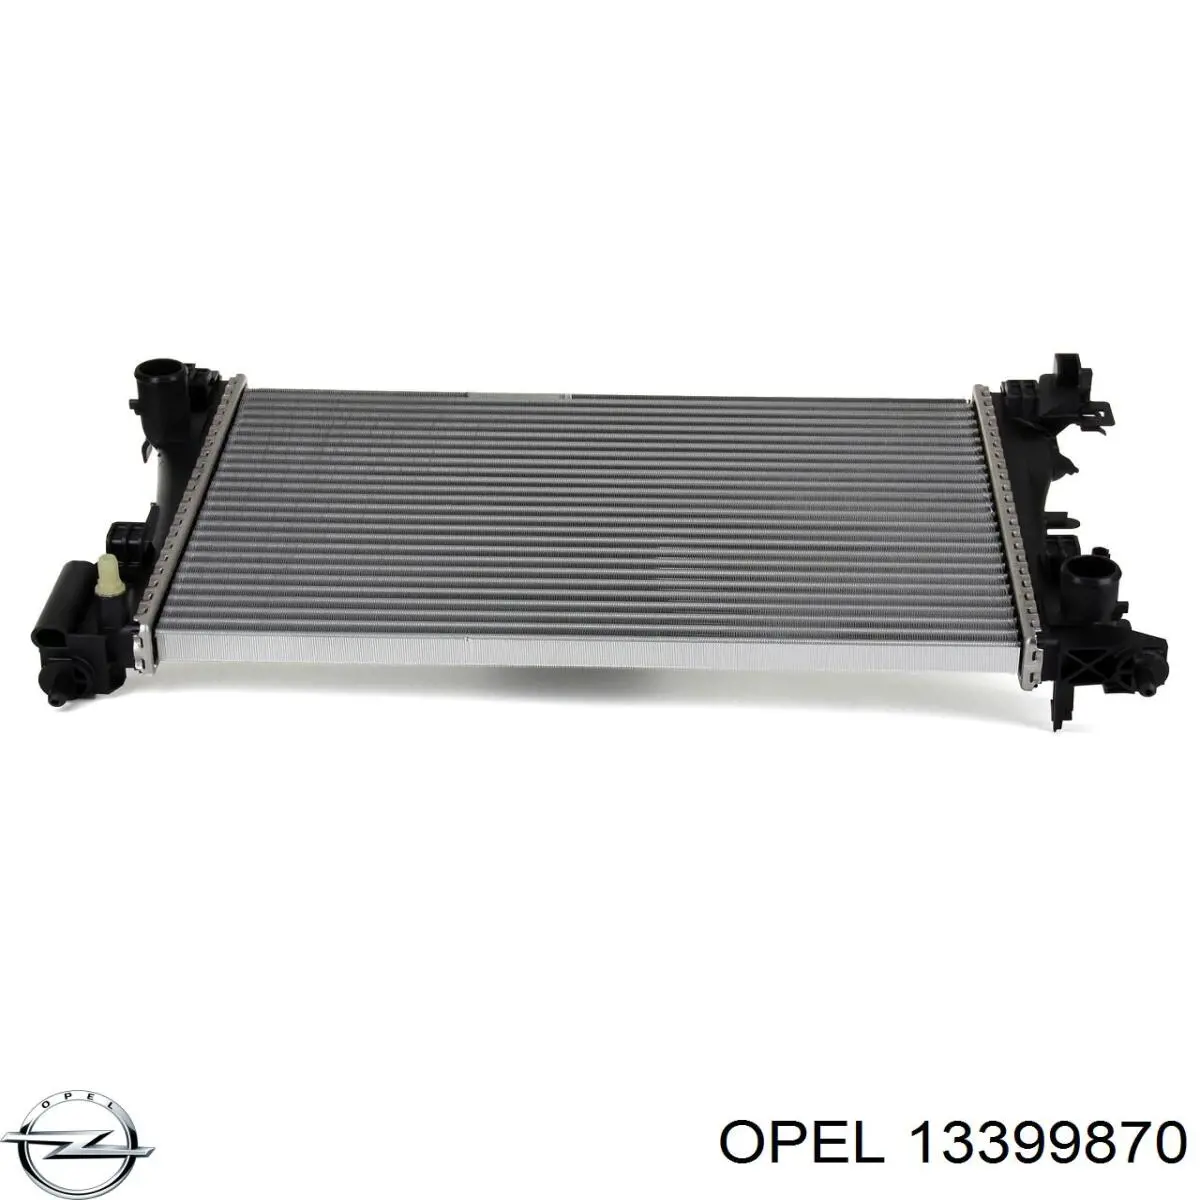 13399870 Opel радиатор